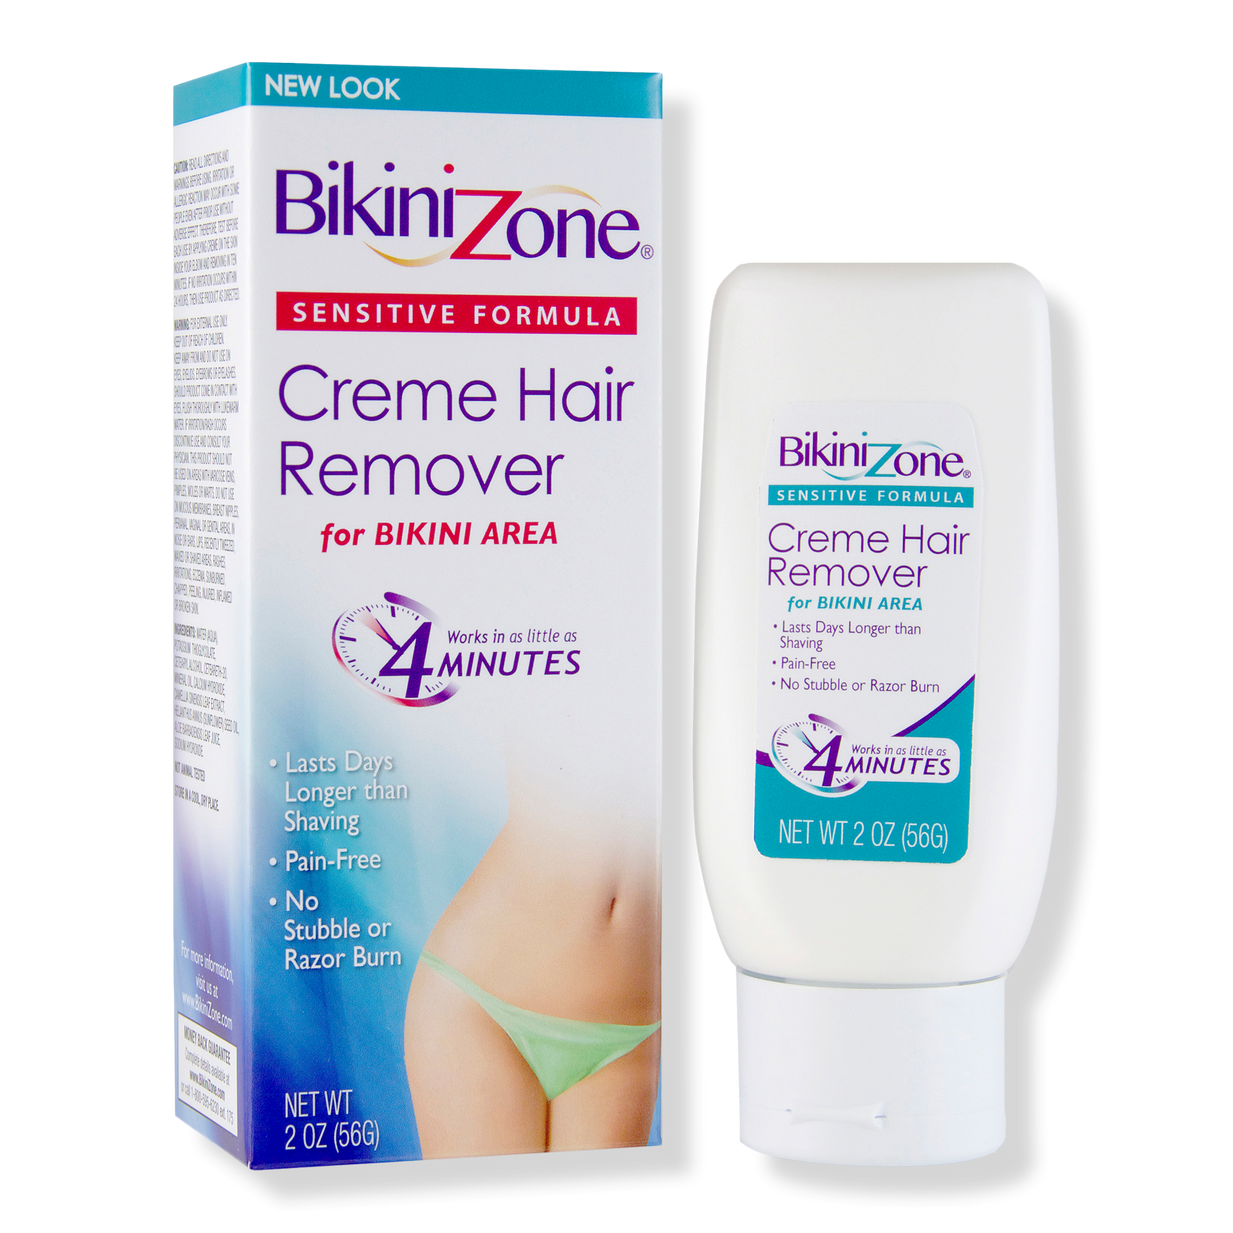 afbrudt regering niveau Creme Hair Remover - Bikini Zone | Ulta Beauty